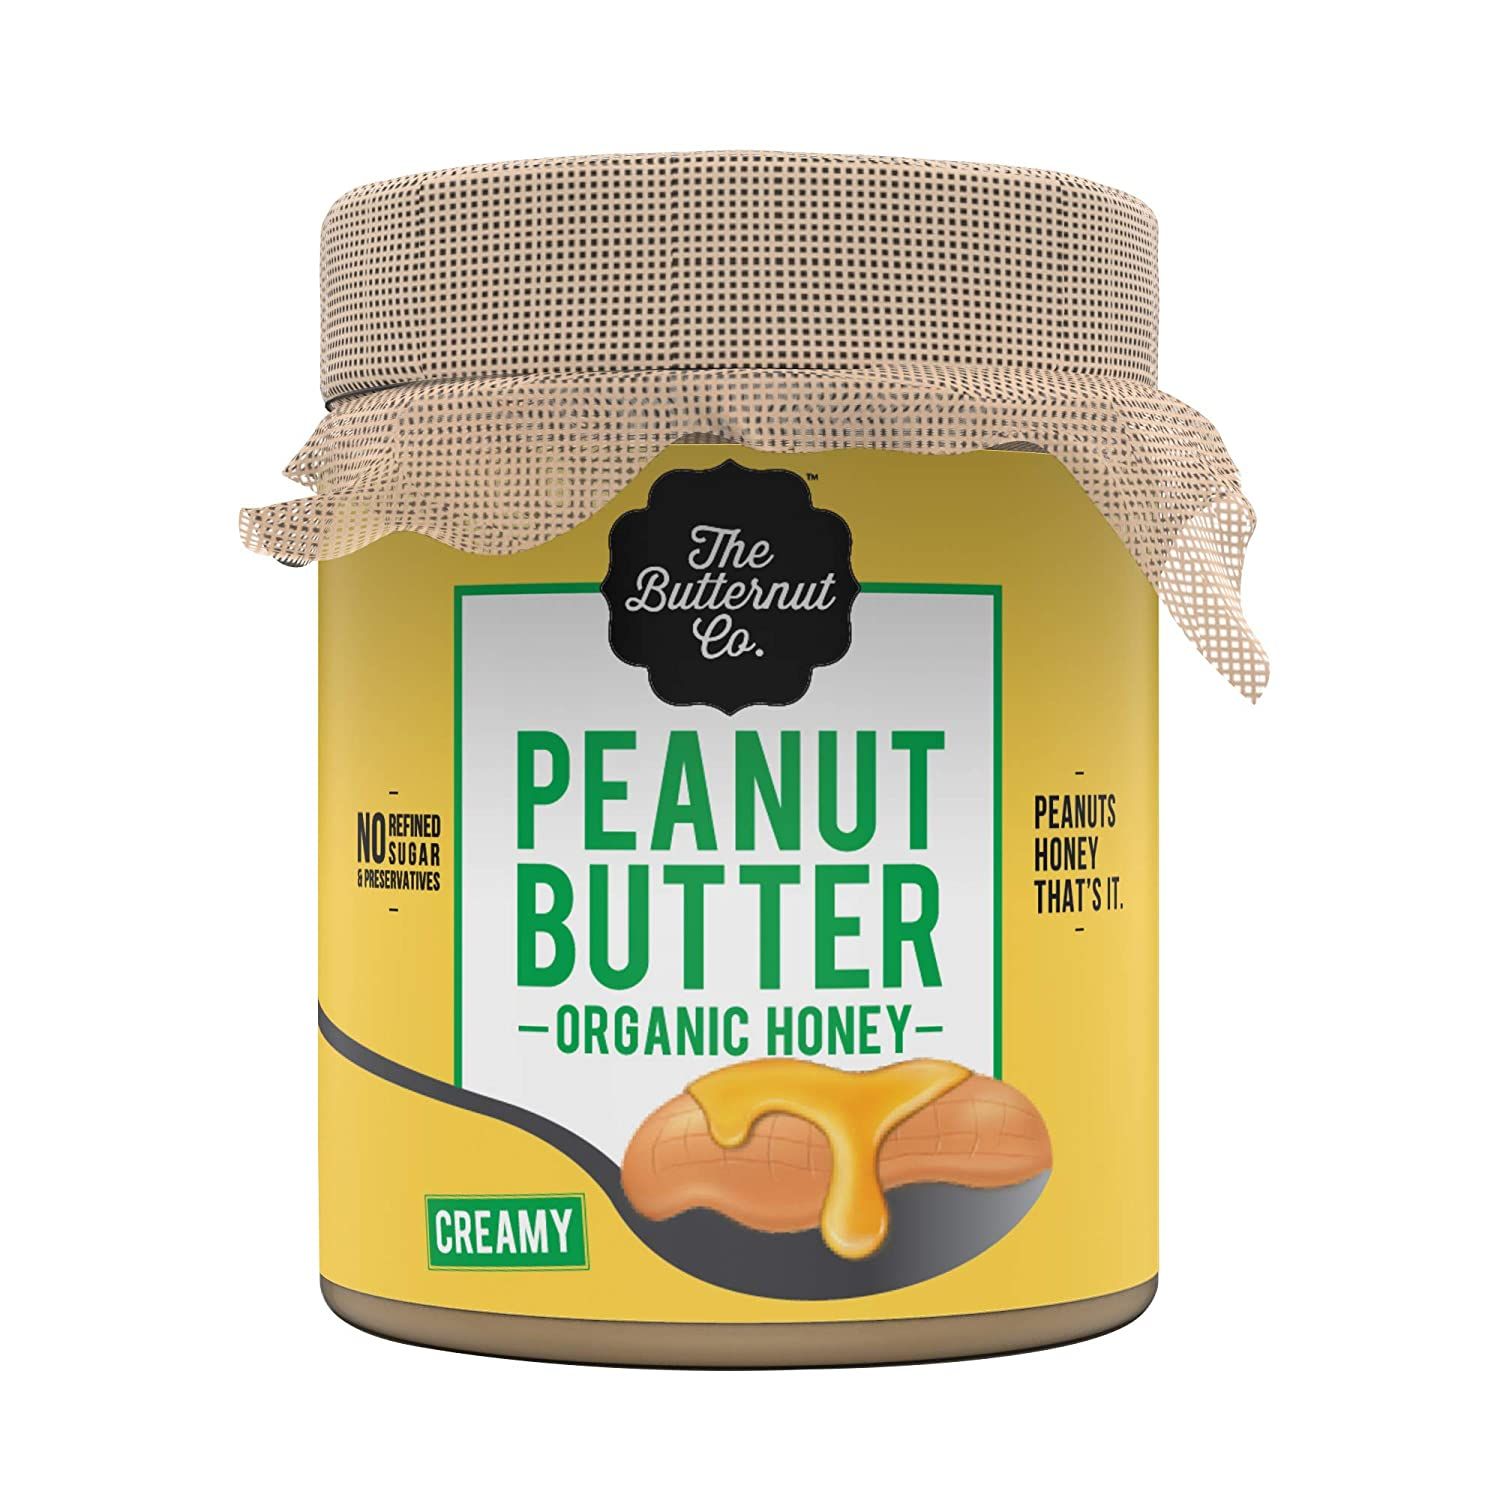 The Butternut Co. Peanut Butter Organic Creamy Image